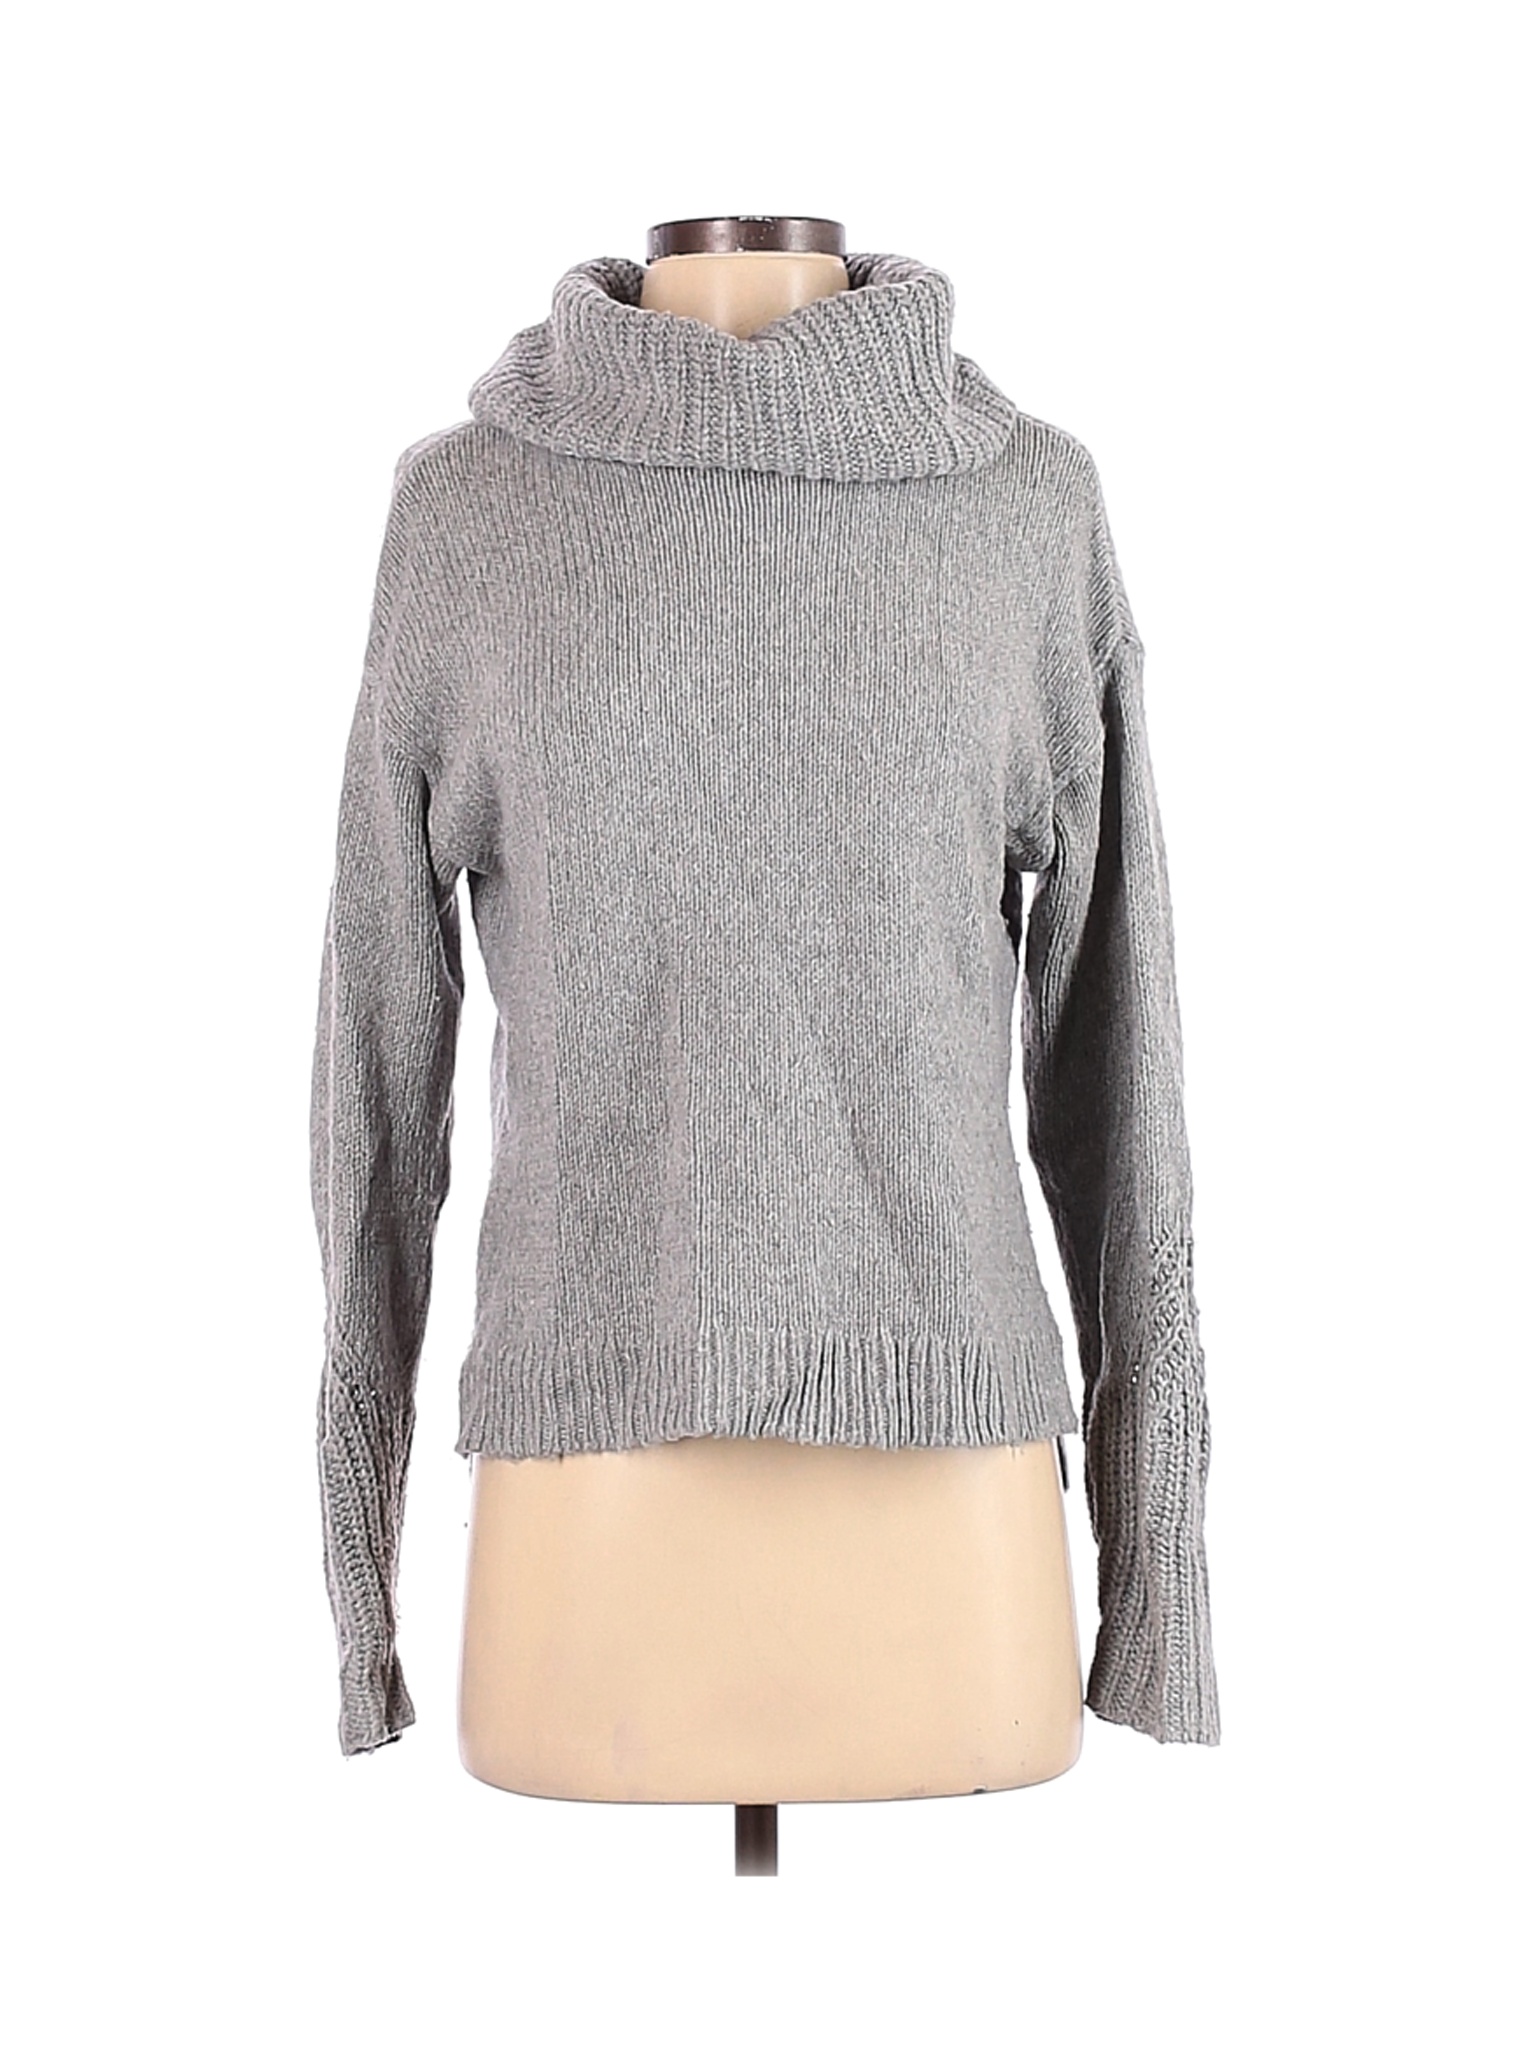 White House Black Market Women Gray Turtleneck Sweater S Ebay